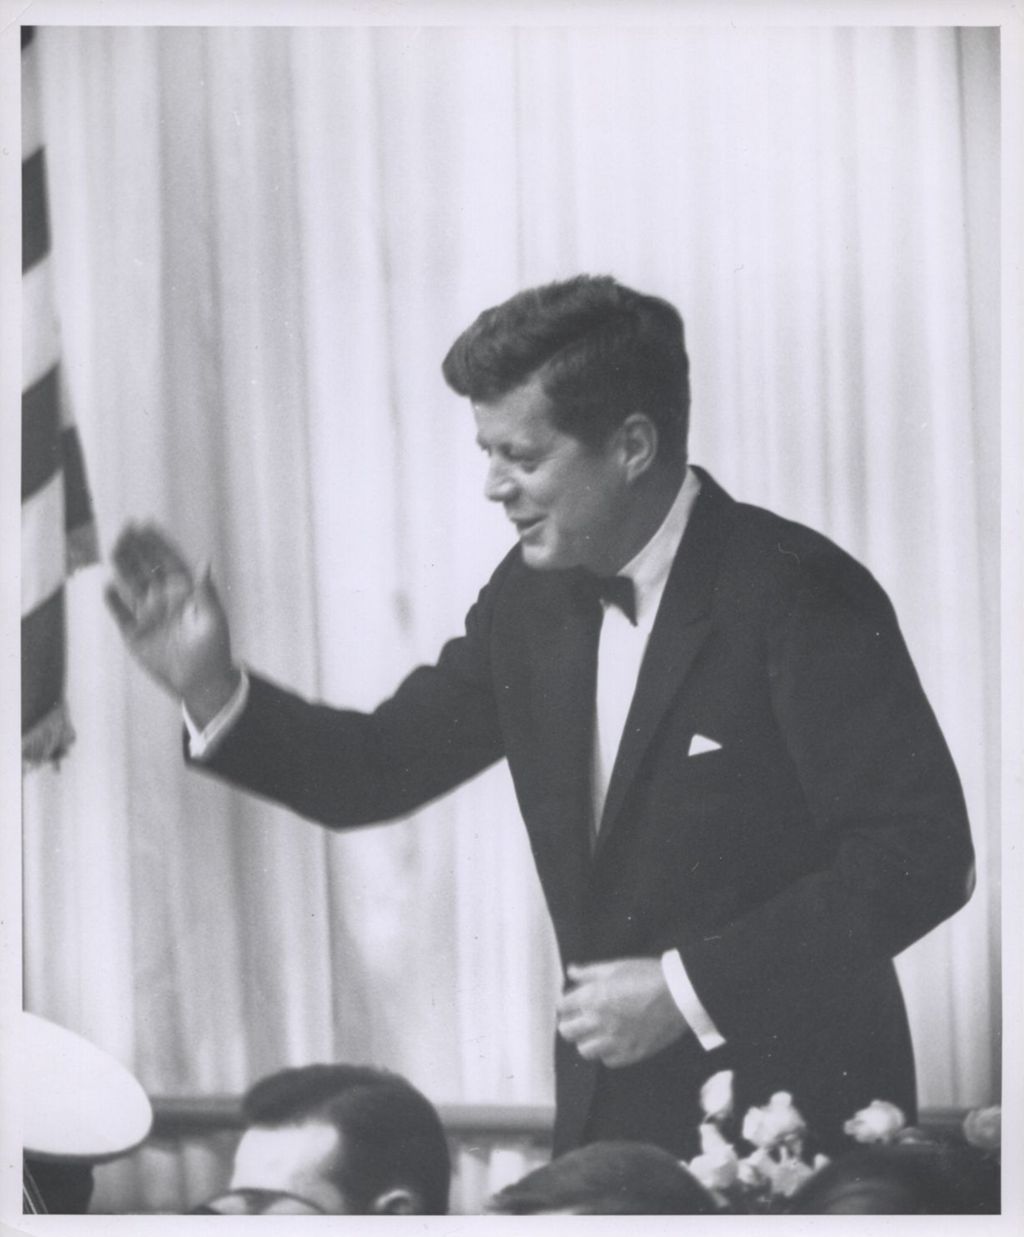 Miniature of John F. Kennedy at Democratic fundraising dinner